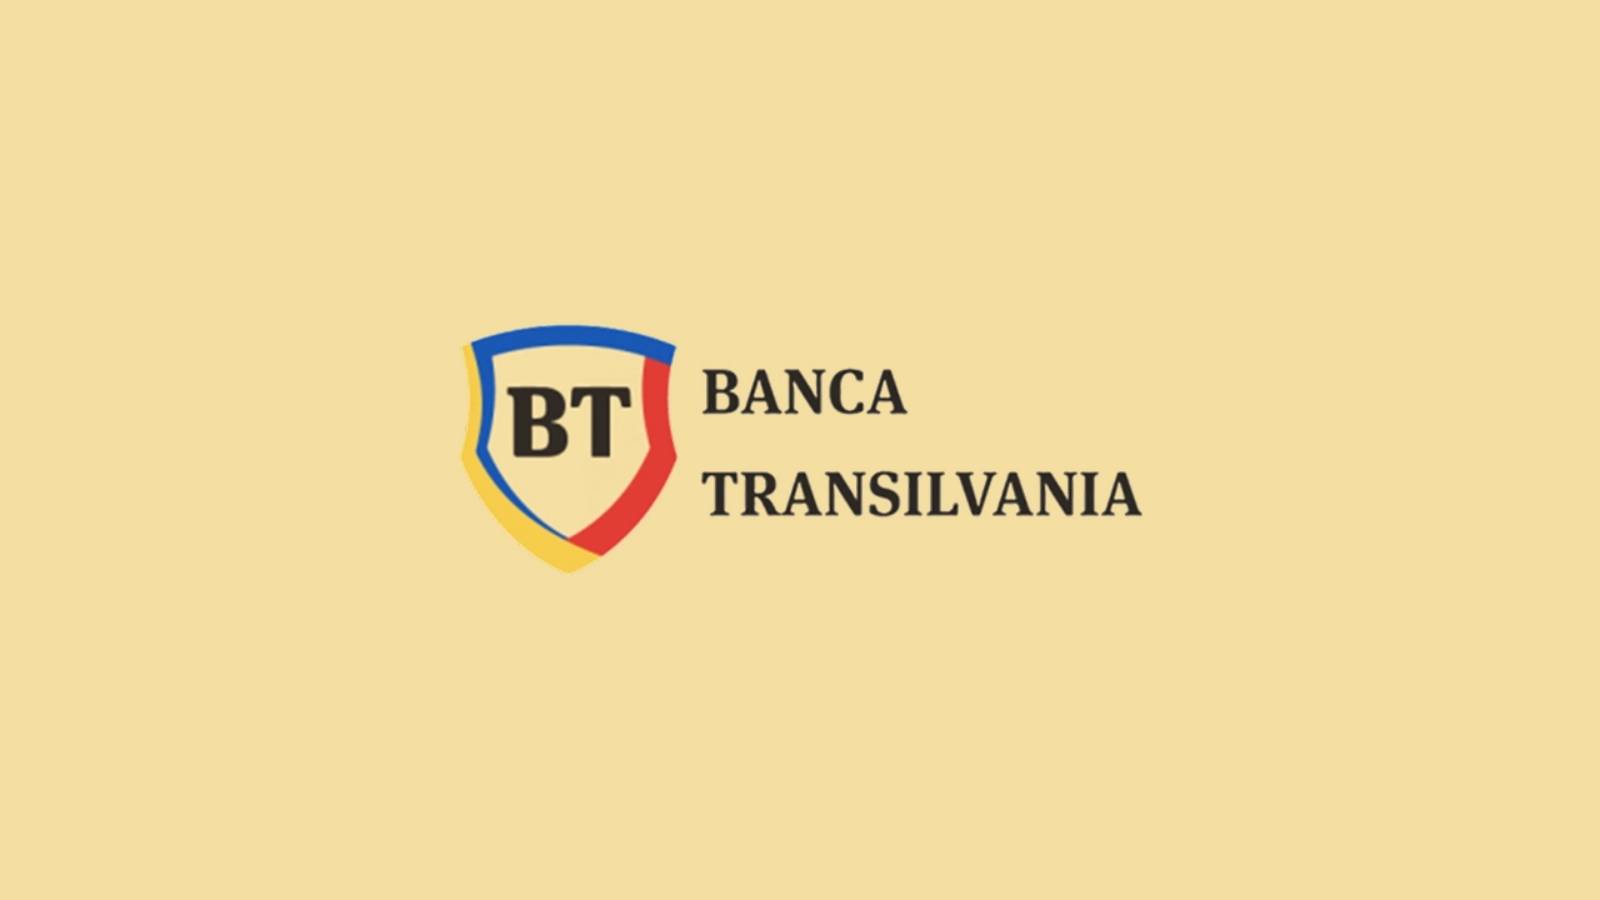 BANCA Transilvania Officiële aanvraag LAST MINUTE AANDACHT Roemeense klanten